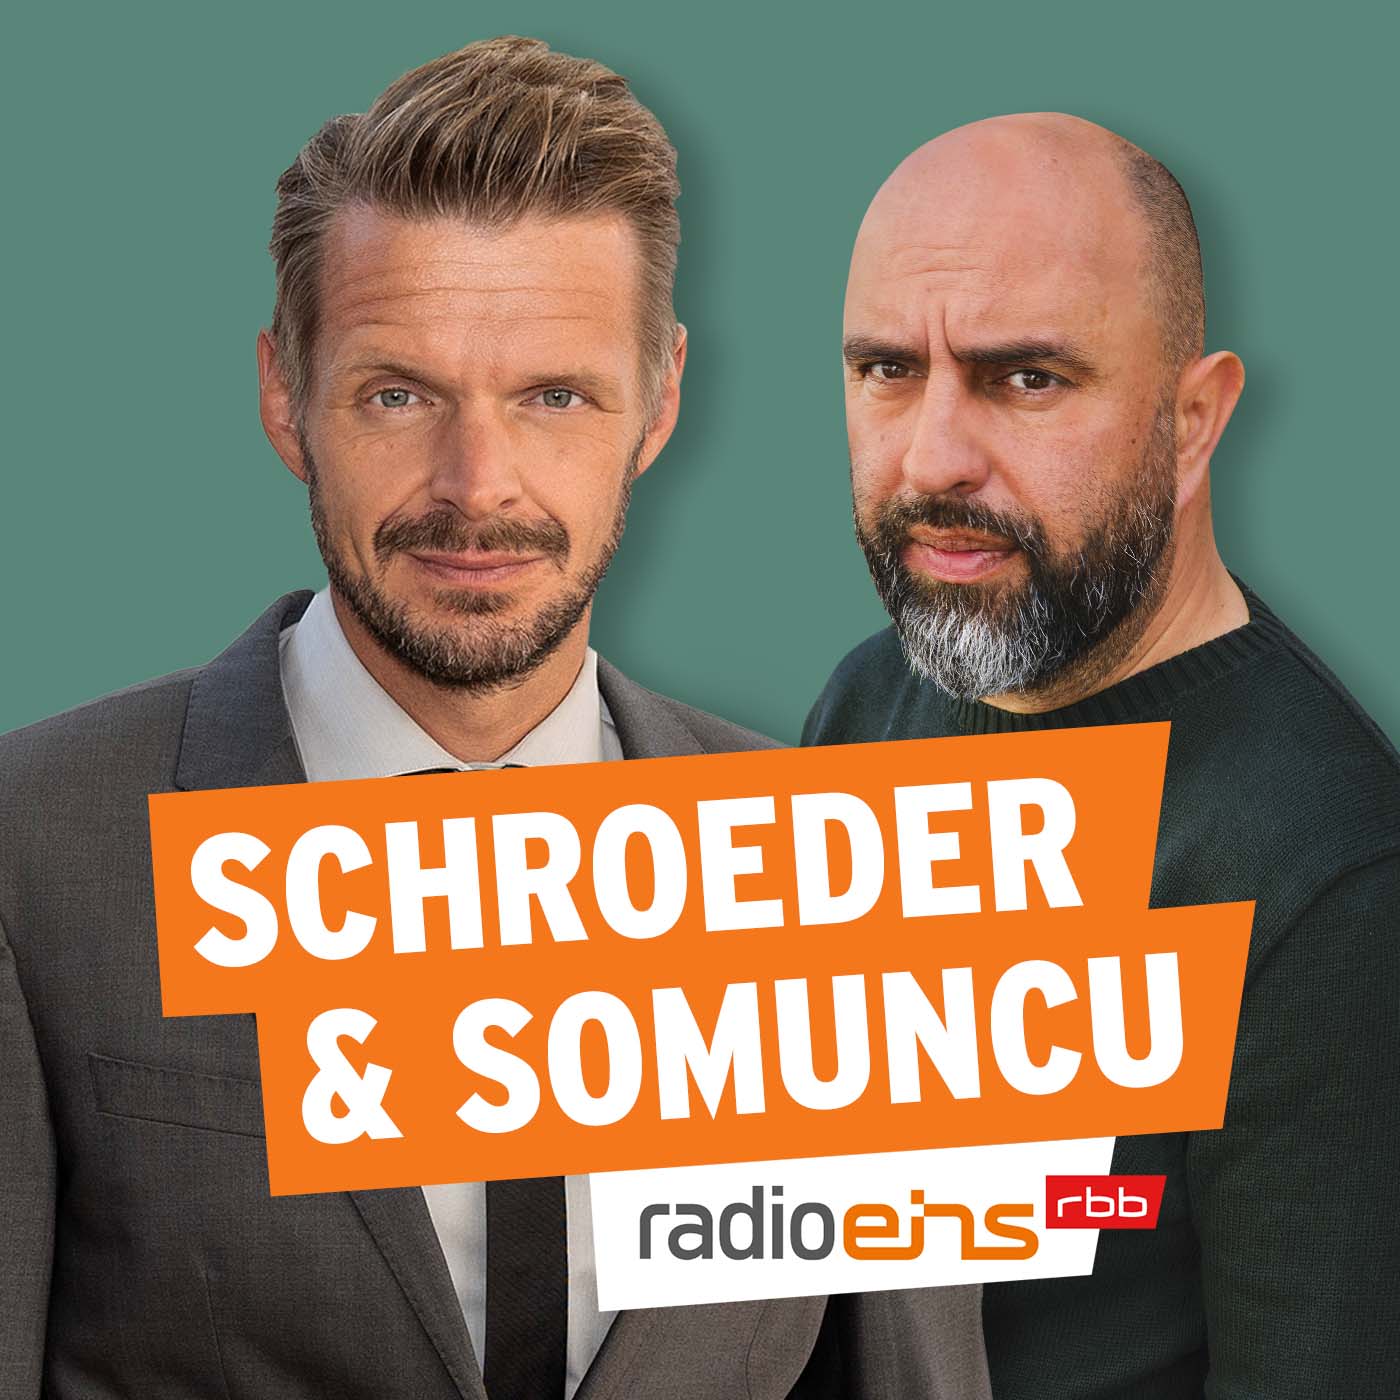 Schroeder & Somuncu #63 - Live aus dem Tipi, Ohrfeigen, Taxifahrer